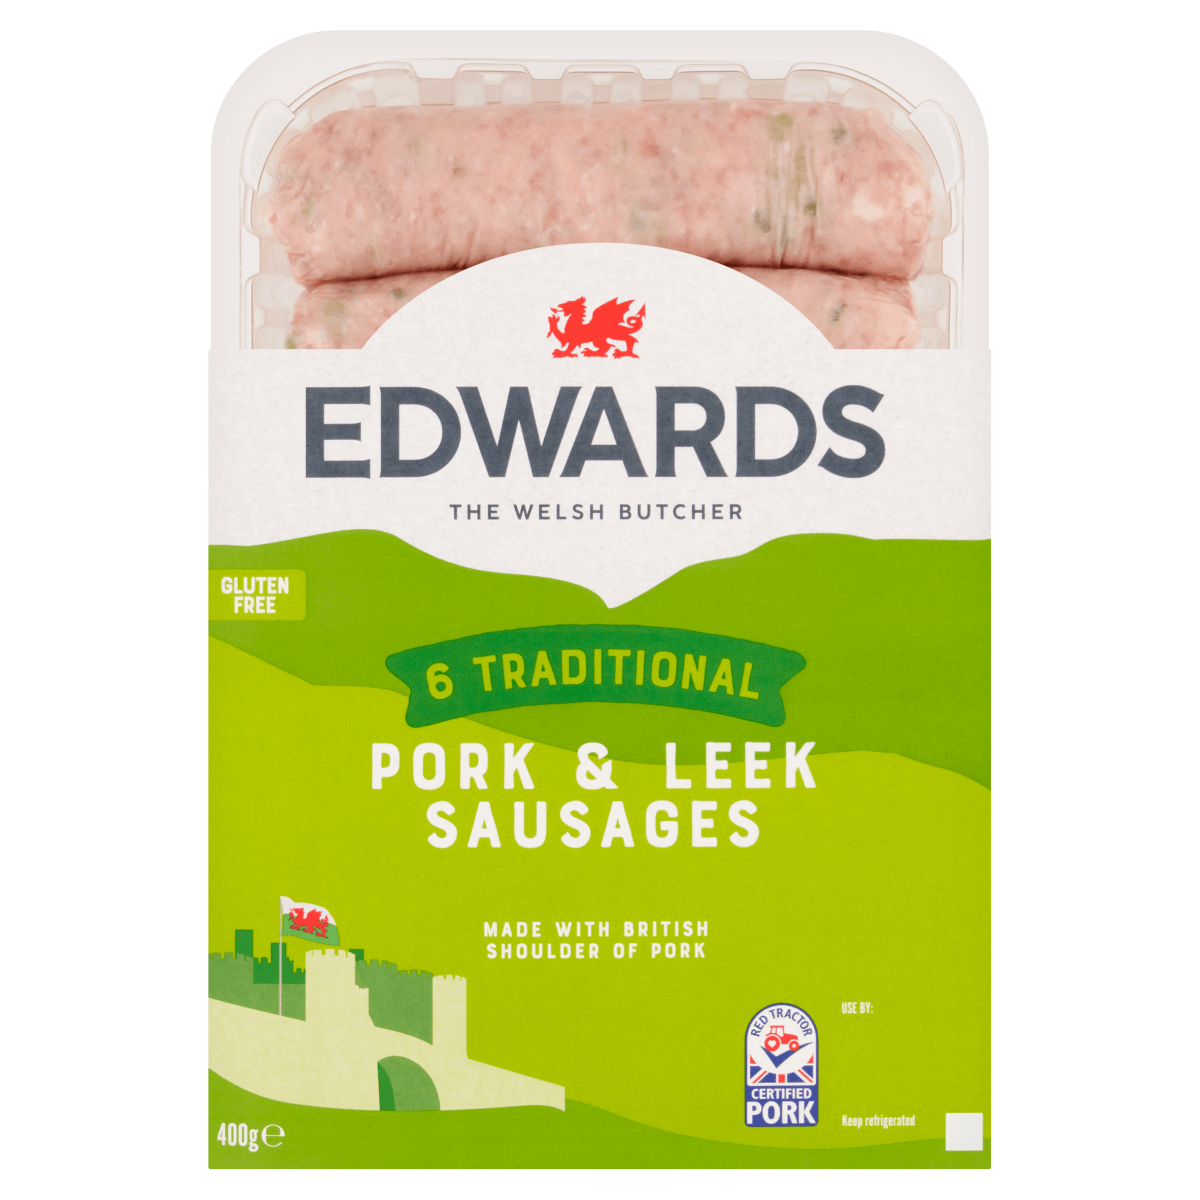 Pork & Leek Sausages